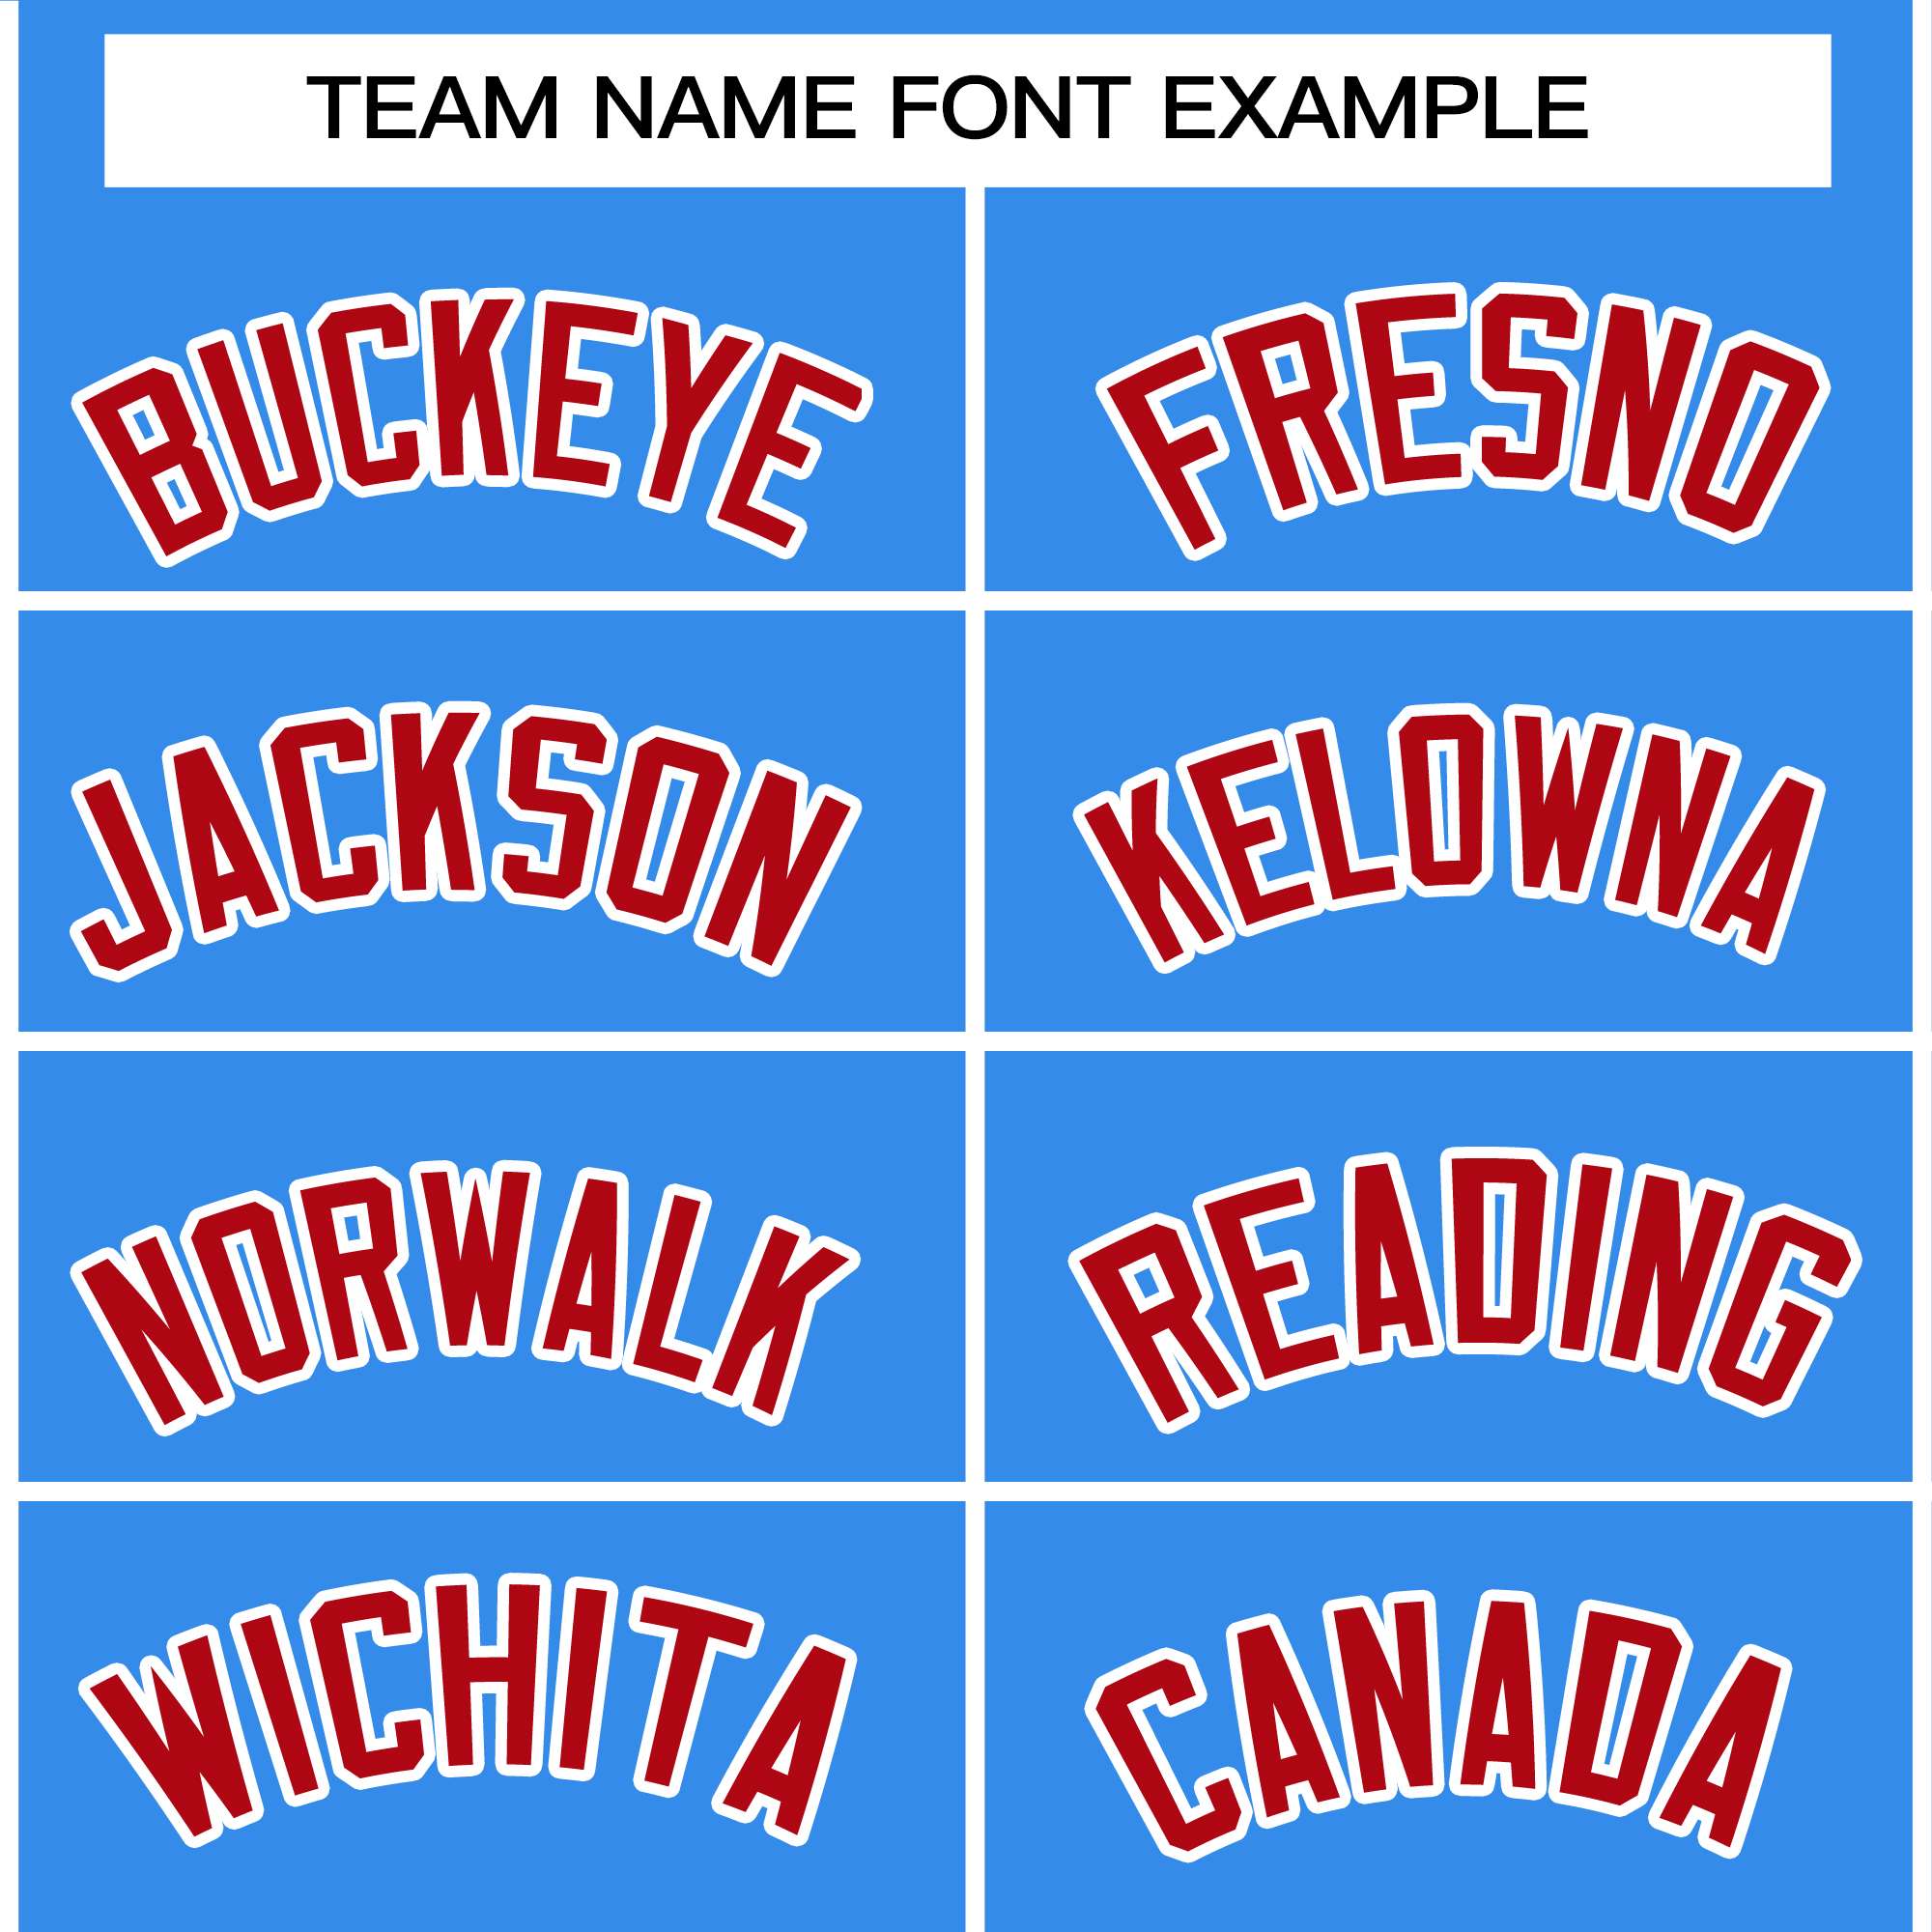 custom shirts & tops team name font example